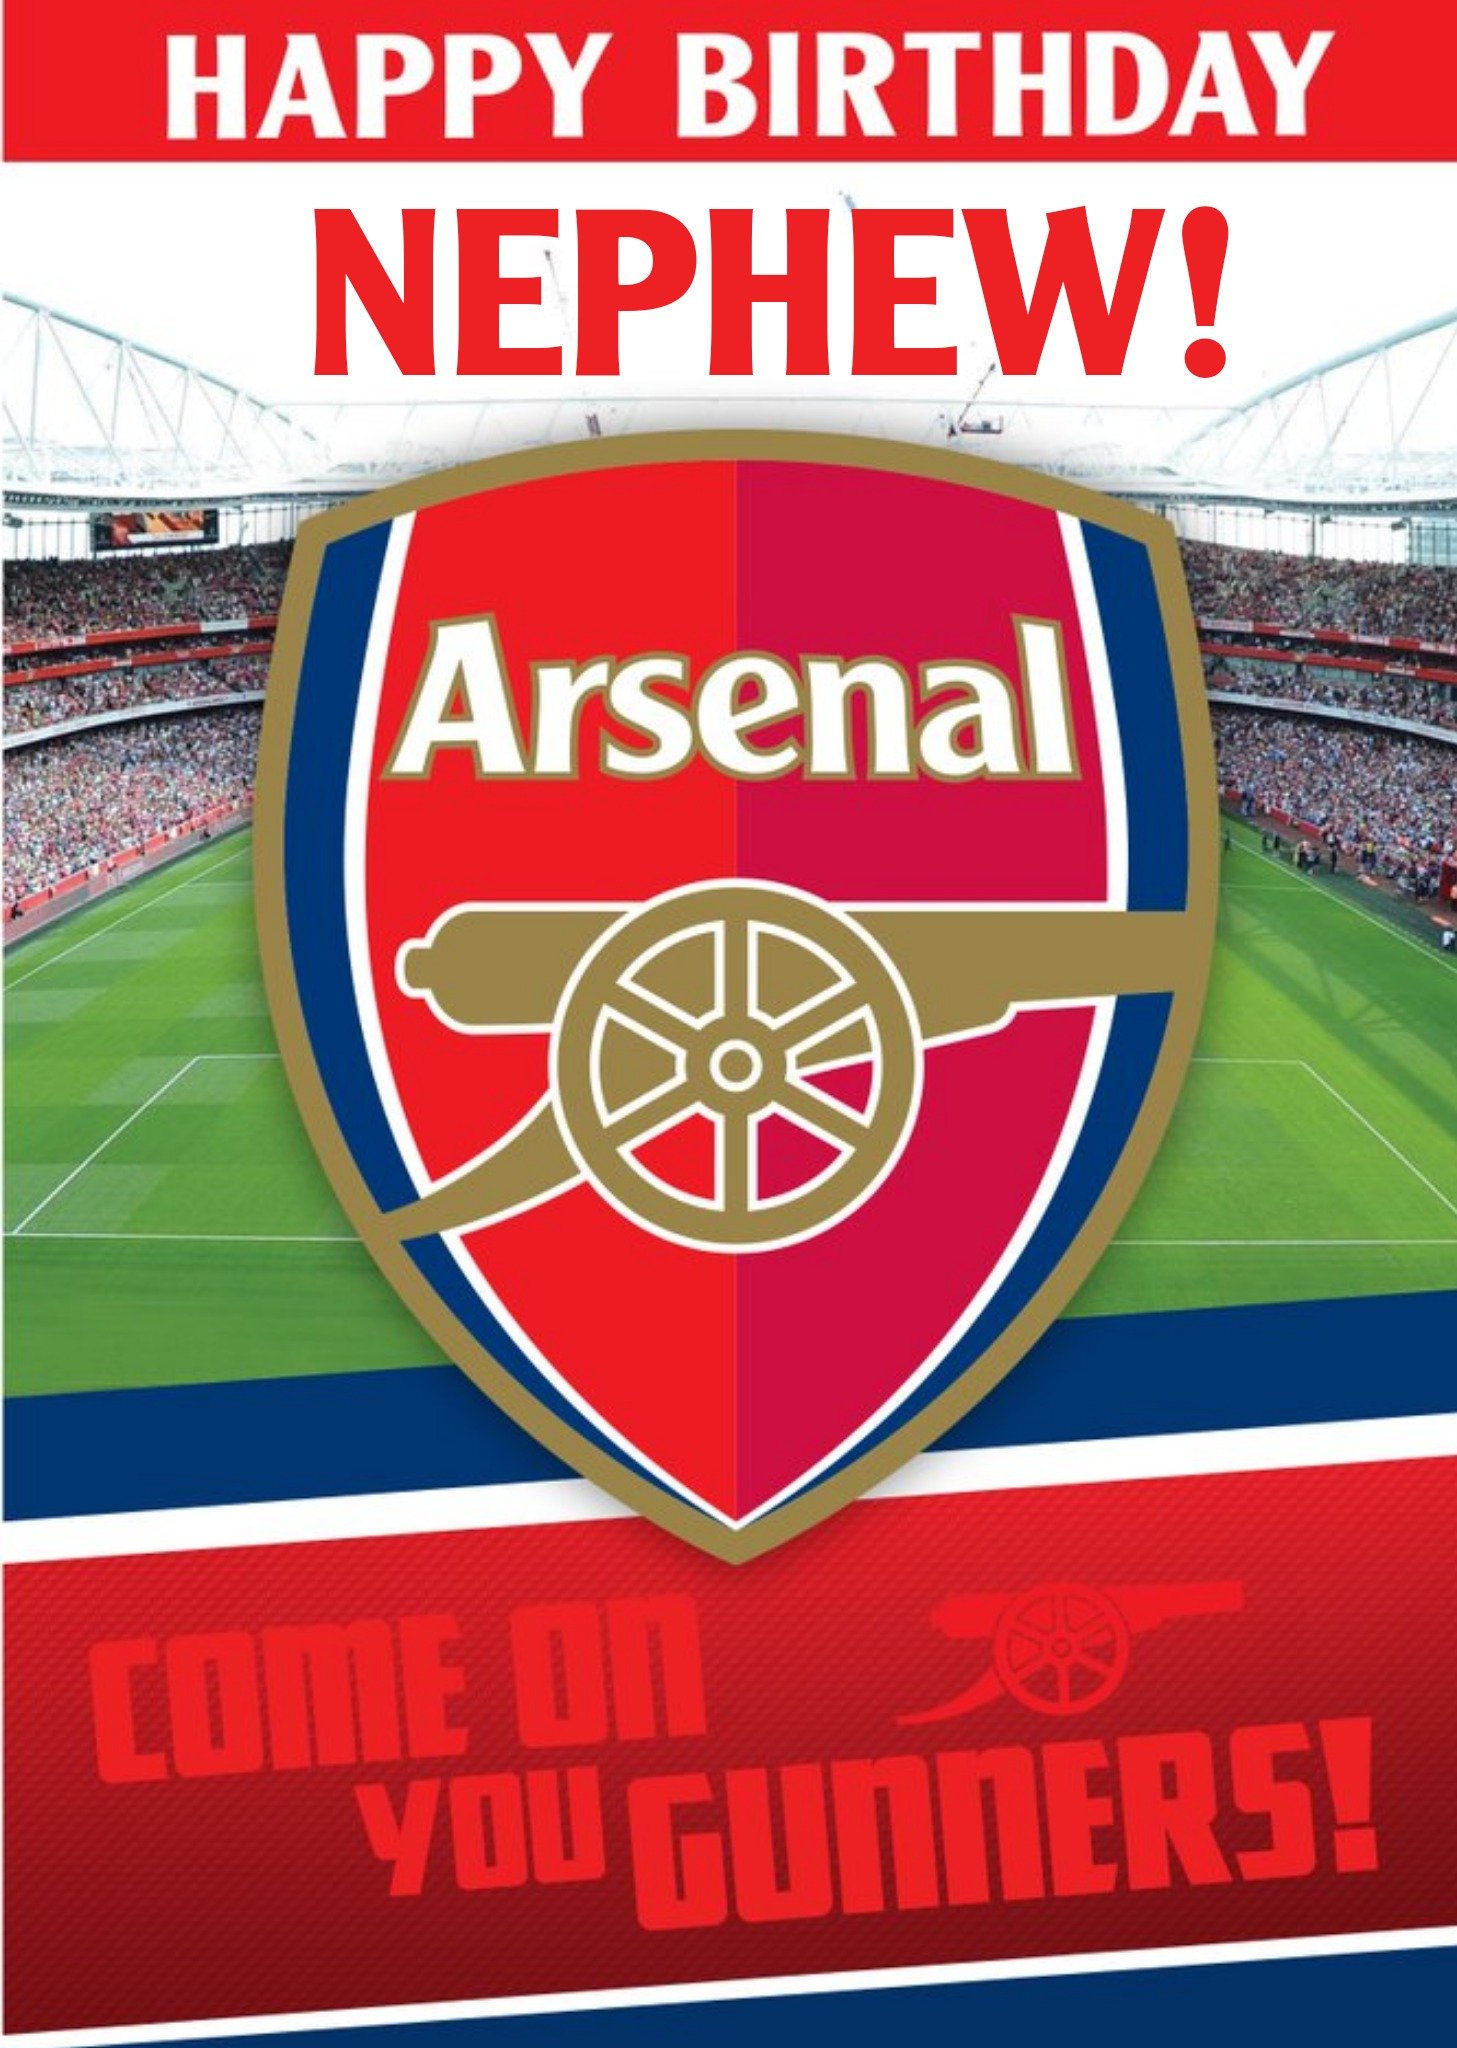 Arsenal Football Stadium Come On You Gunners Nephew Birthday Card, Large